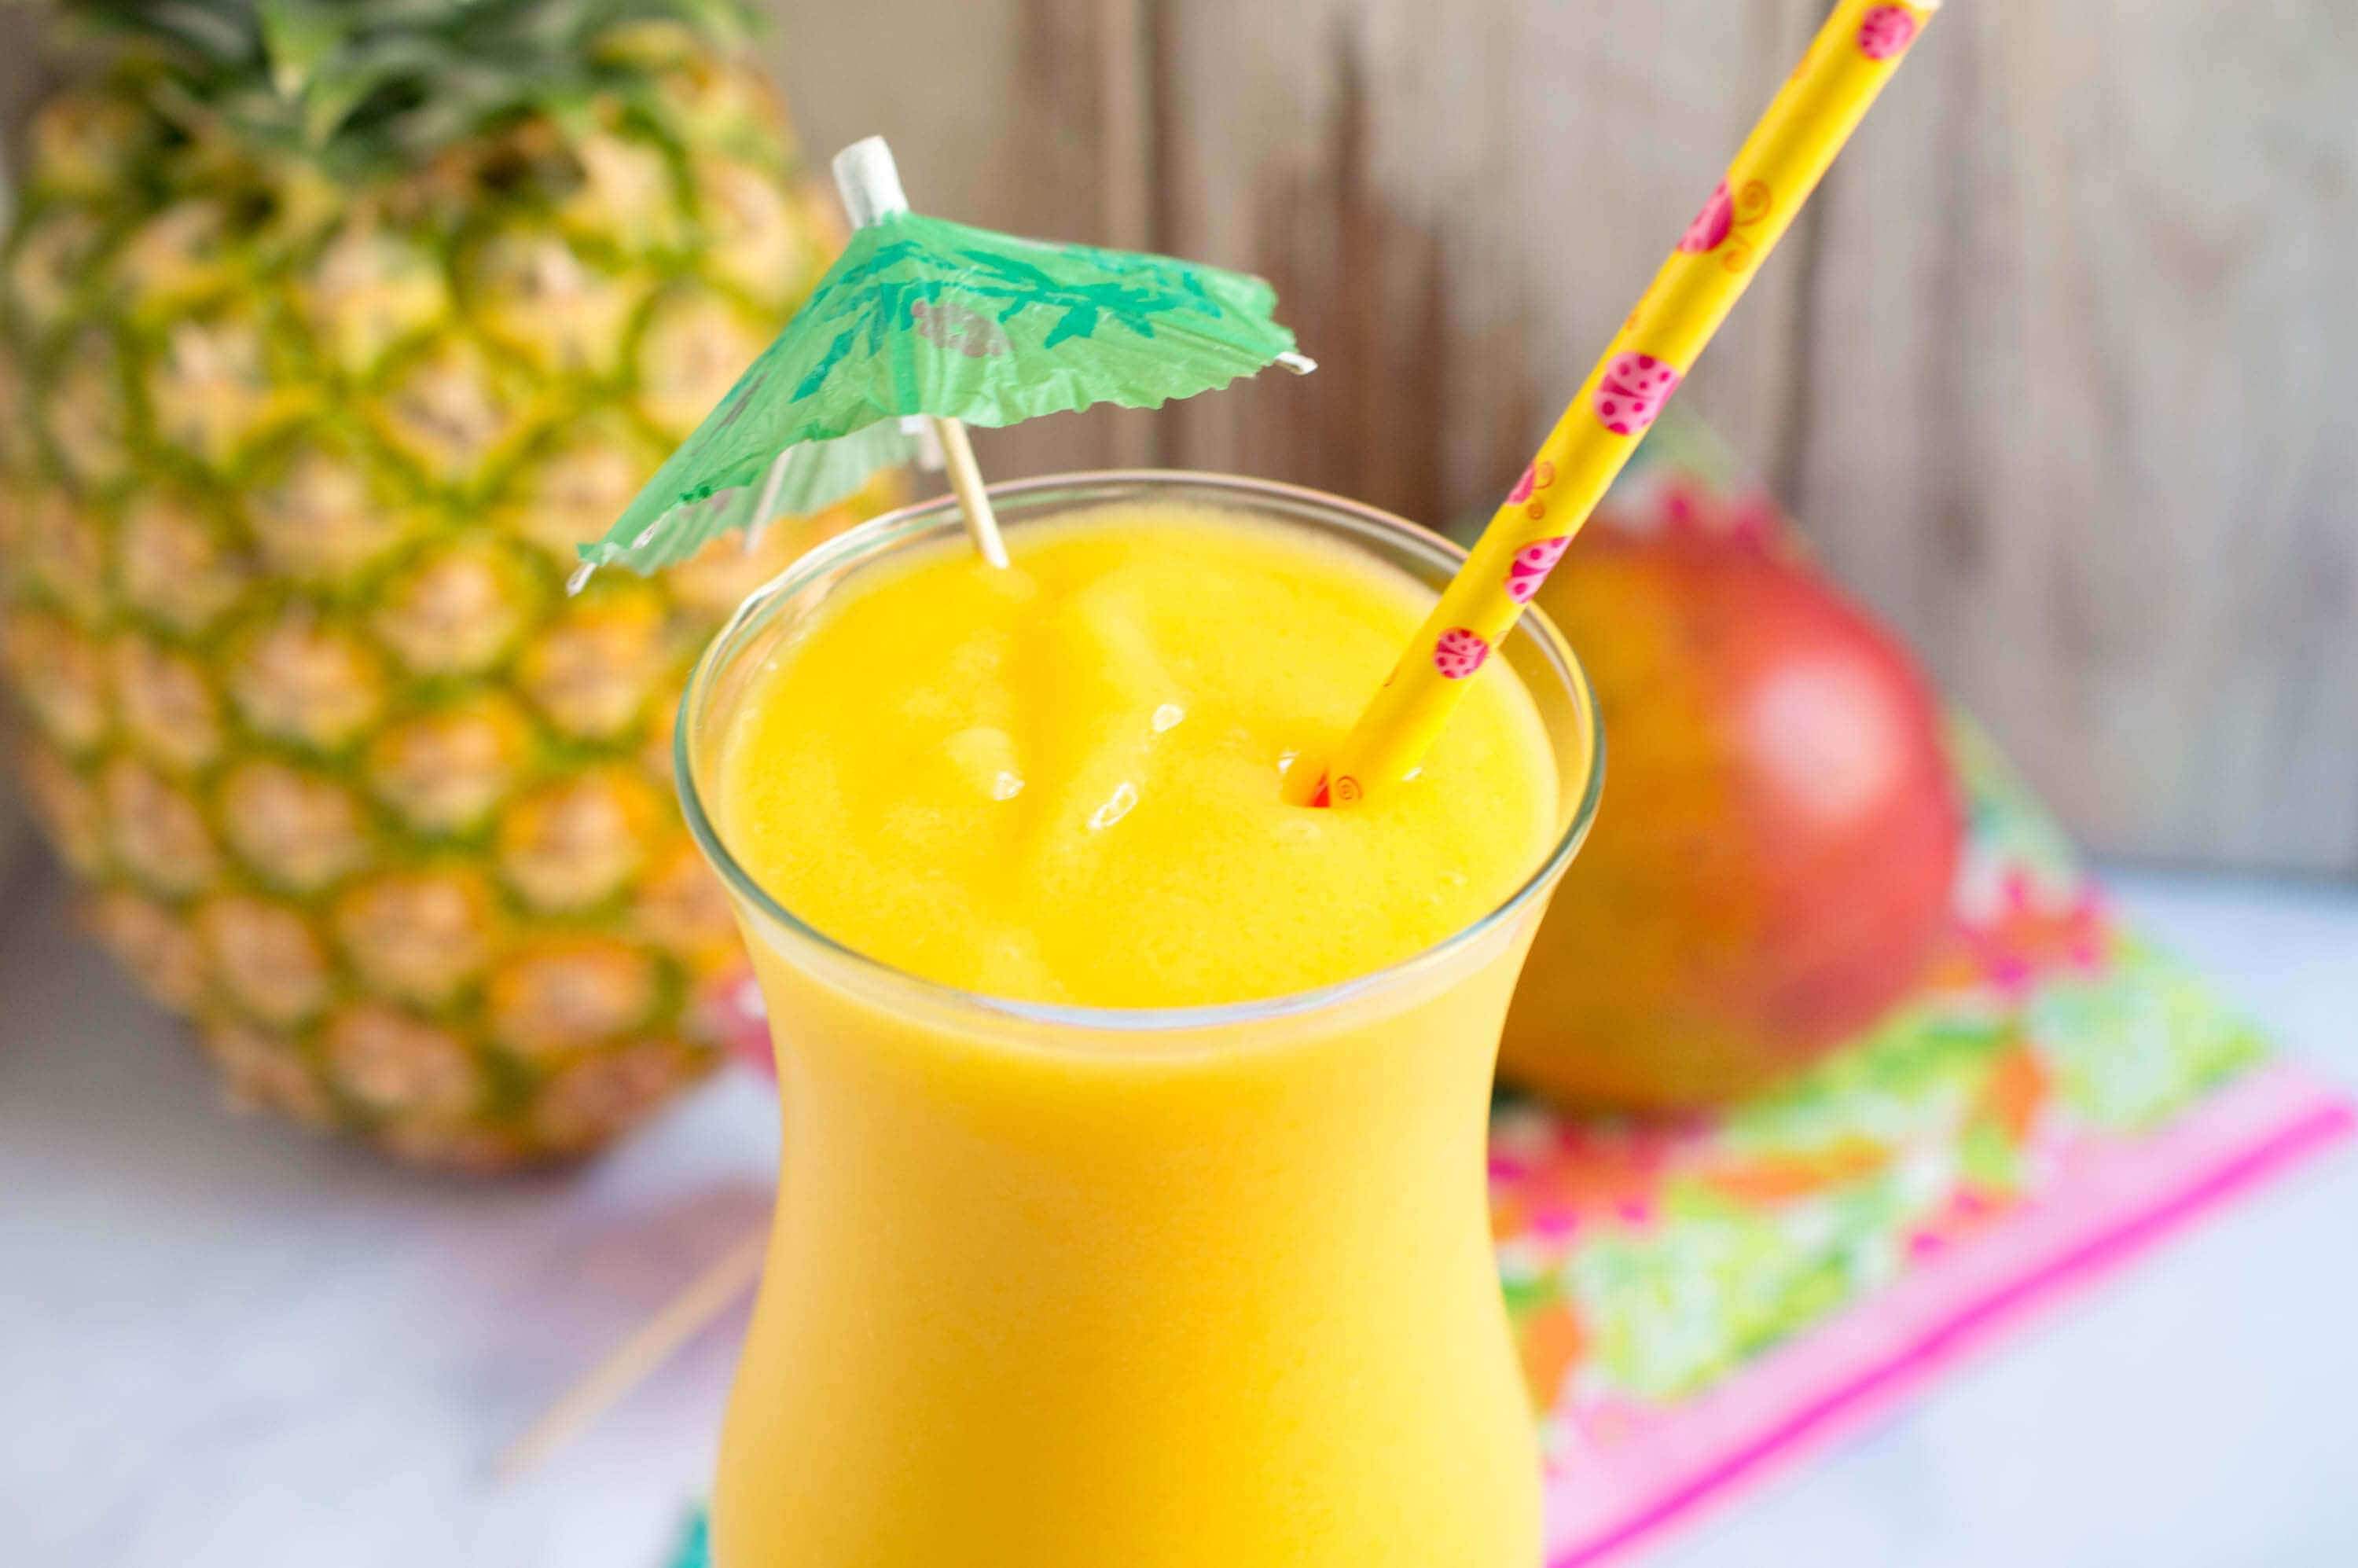 https://champagneandcoconuts.com/wp-content/uploads/2019/07/Cocktail-Recipe-for-Pineapple-Mango-Slush.jpg